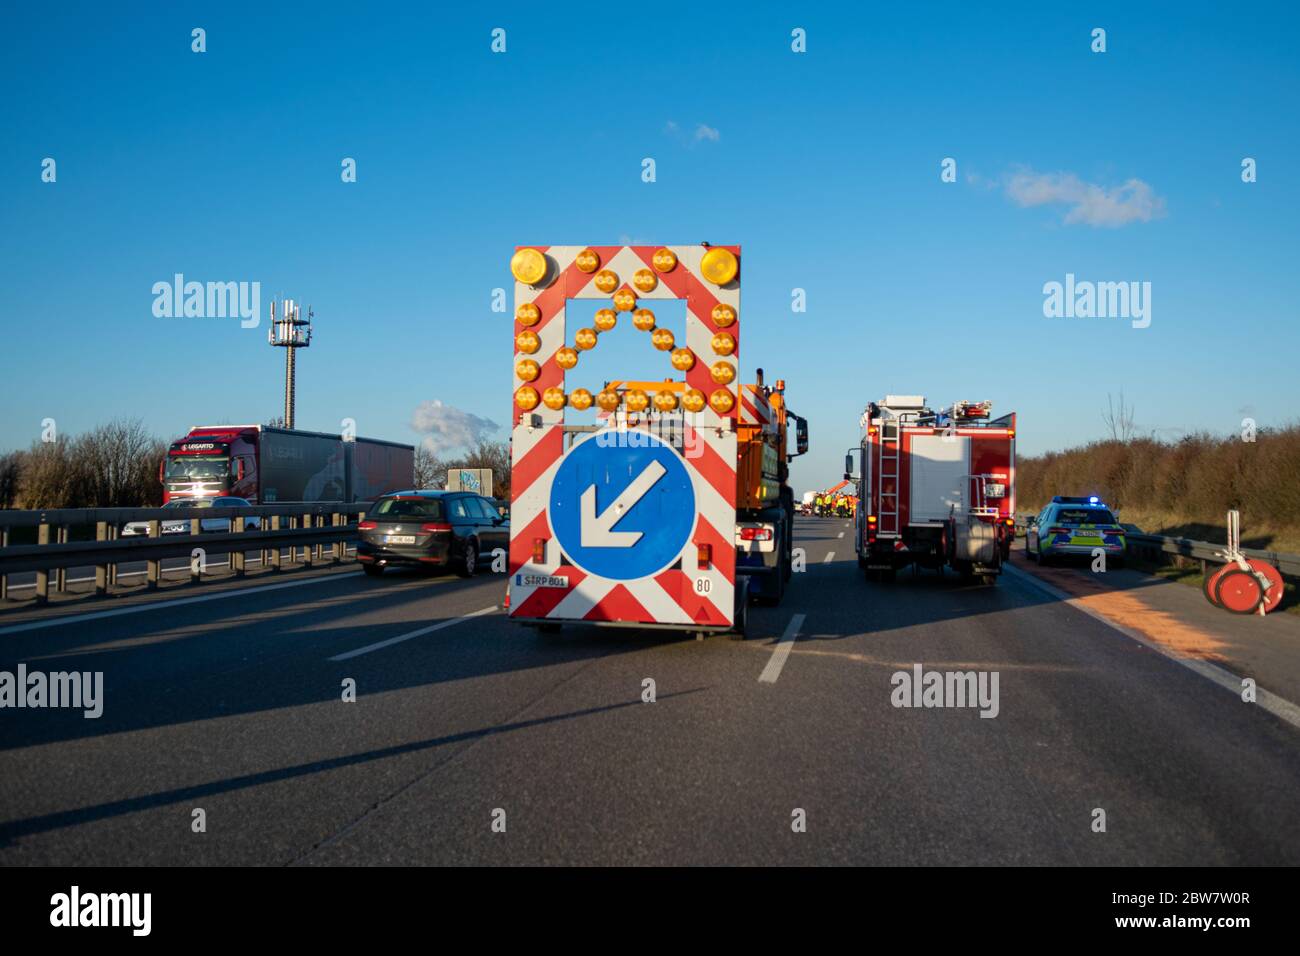 Baustelle / Unfall auf Autobahn A81 - Symbolbild Stock Photo